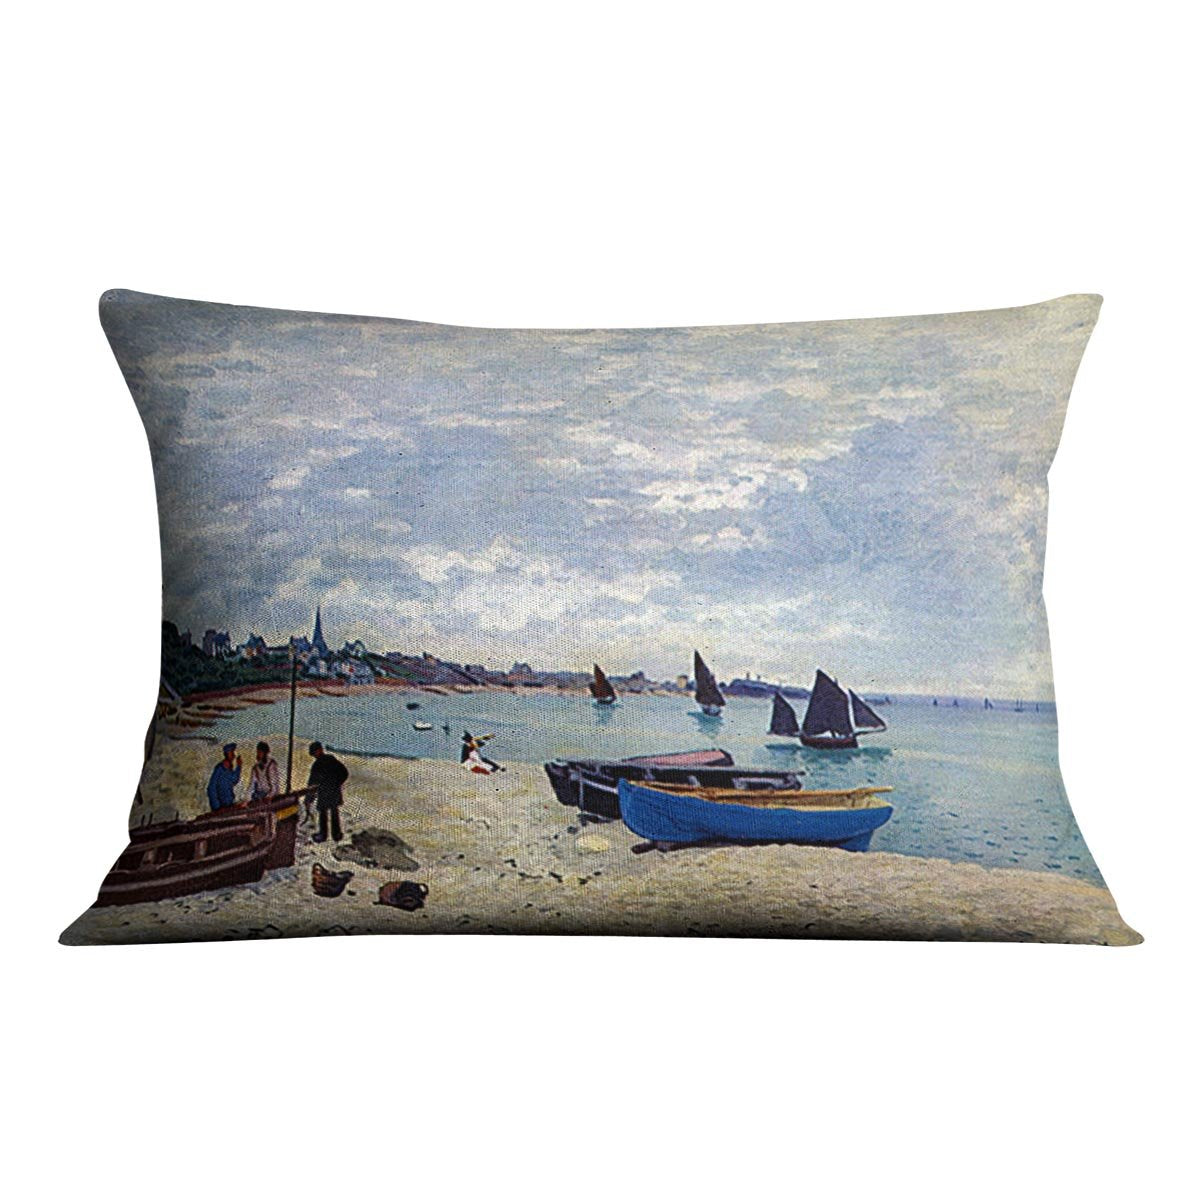 The Beach at Sainte Adresse 2 by Monet Throw Pillow